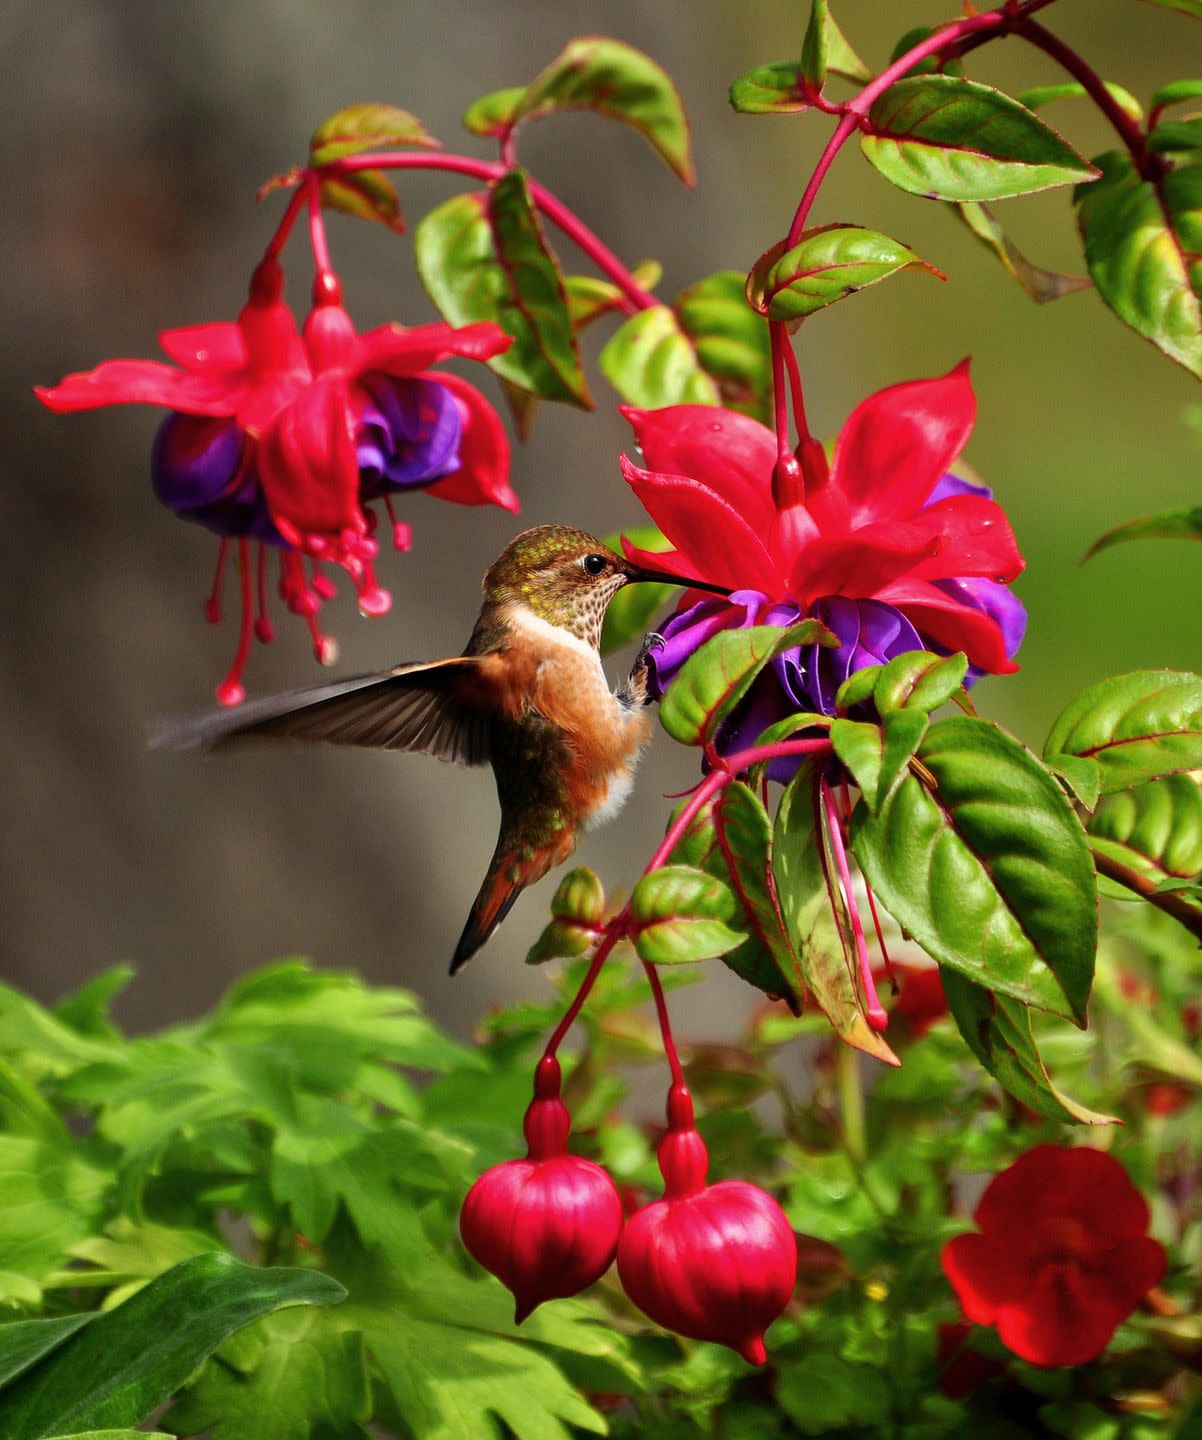 flowers that attract hummingbirds like fuschia